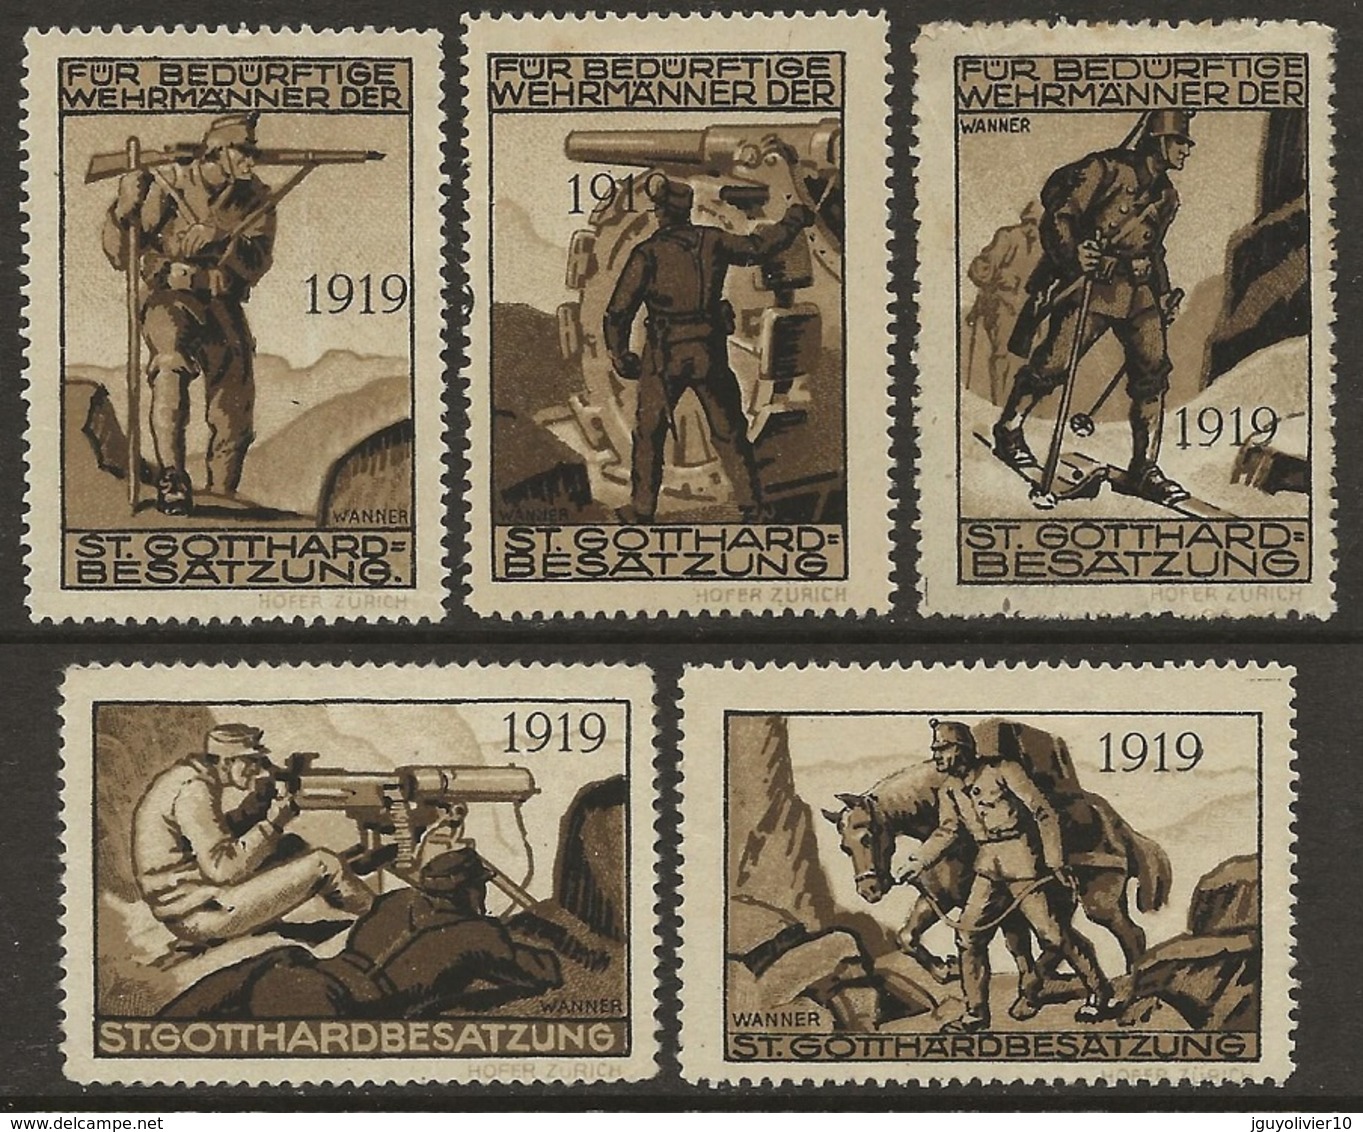 Suisse WWI Vignette Militaire Soldatenmarken FORTRESS TROOPS Set 1914-18 Mixed Condition, Otherwise Look Fine - Vignettes